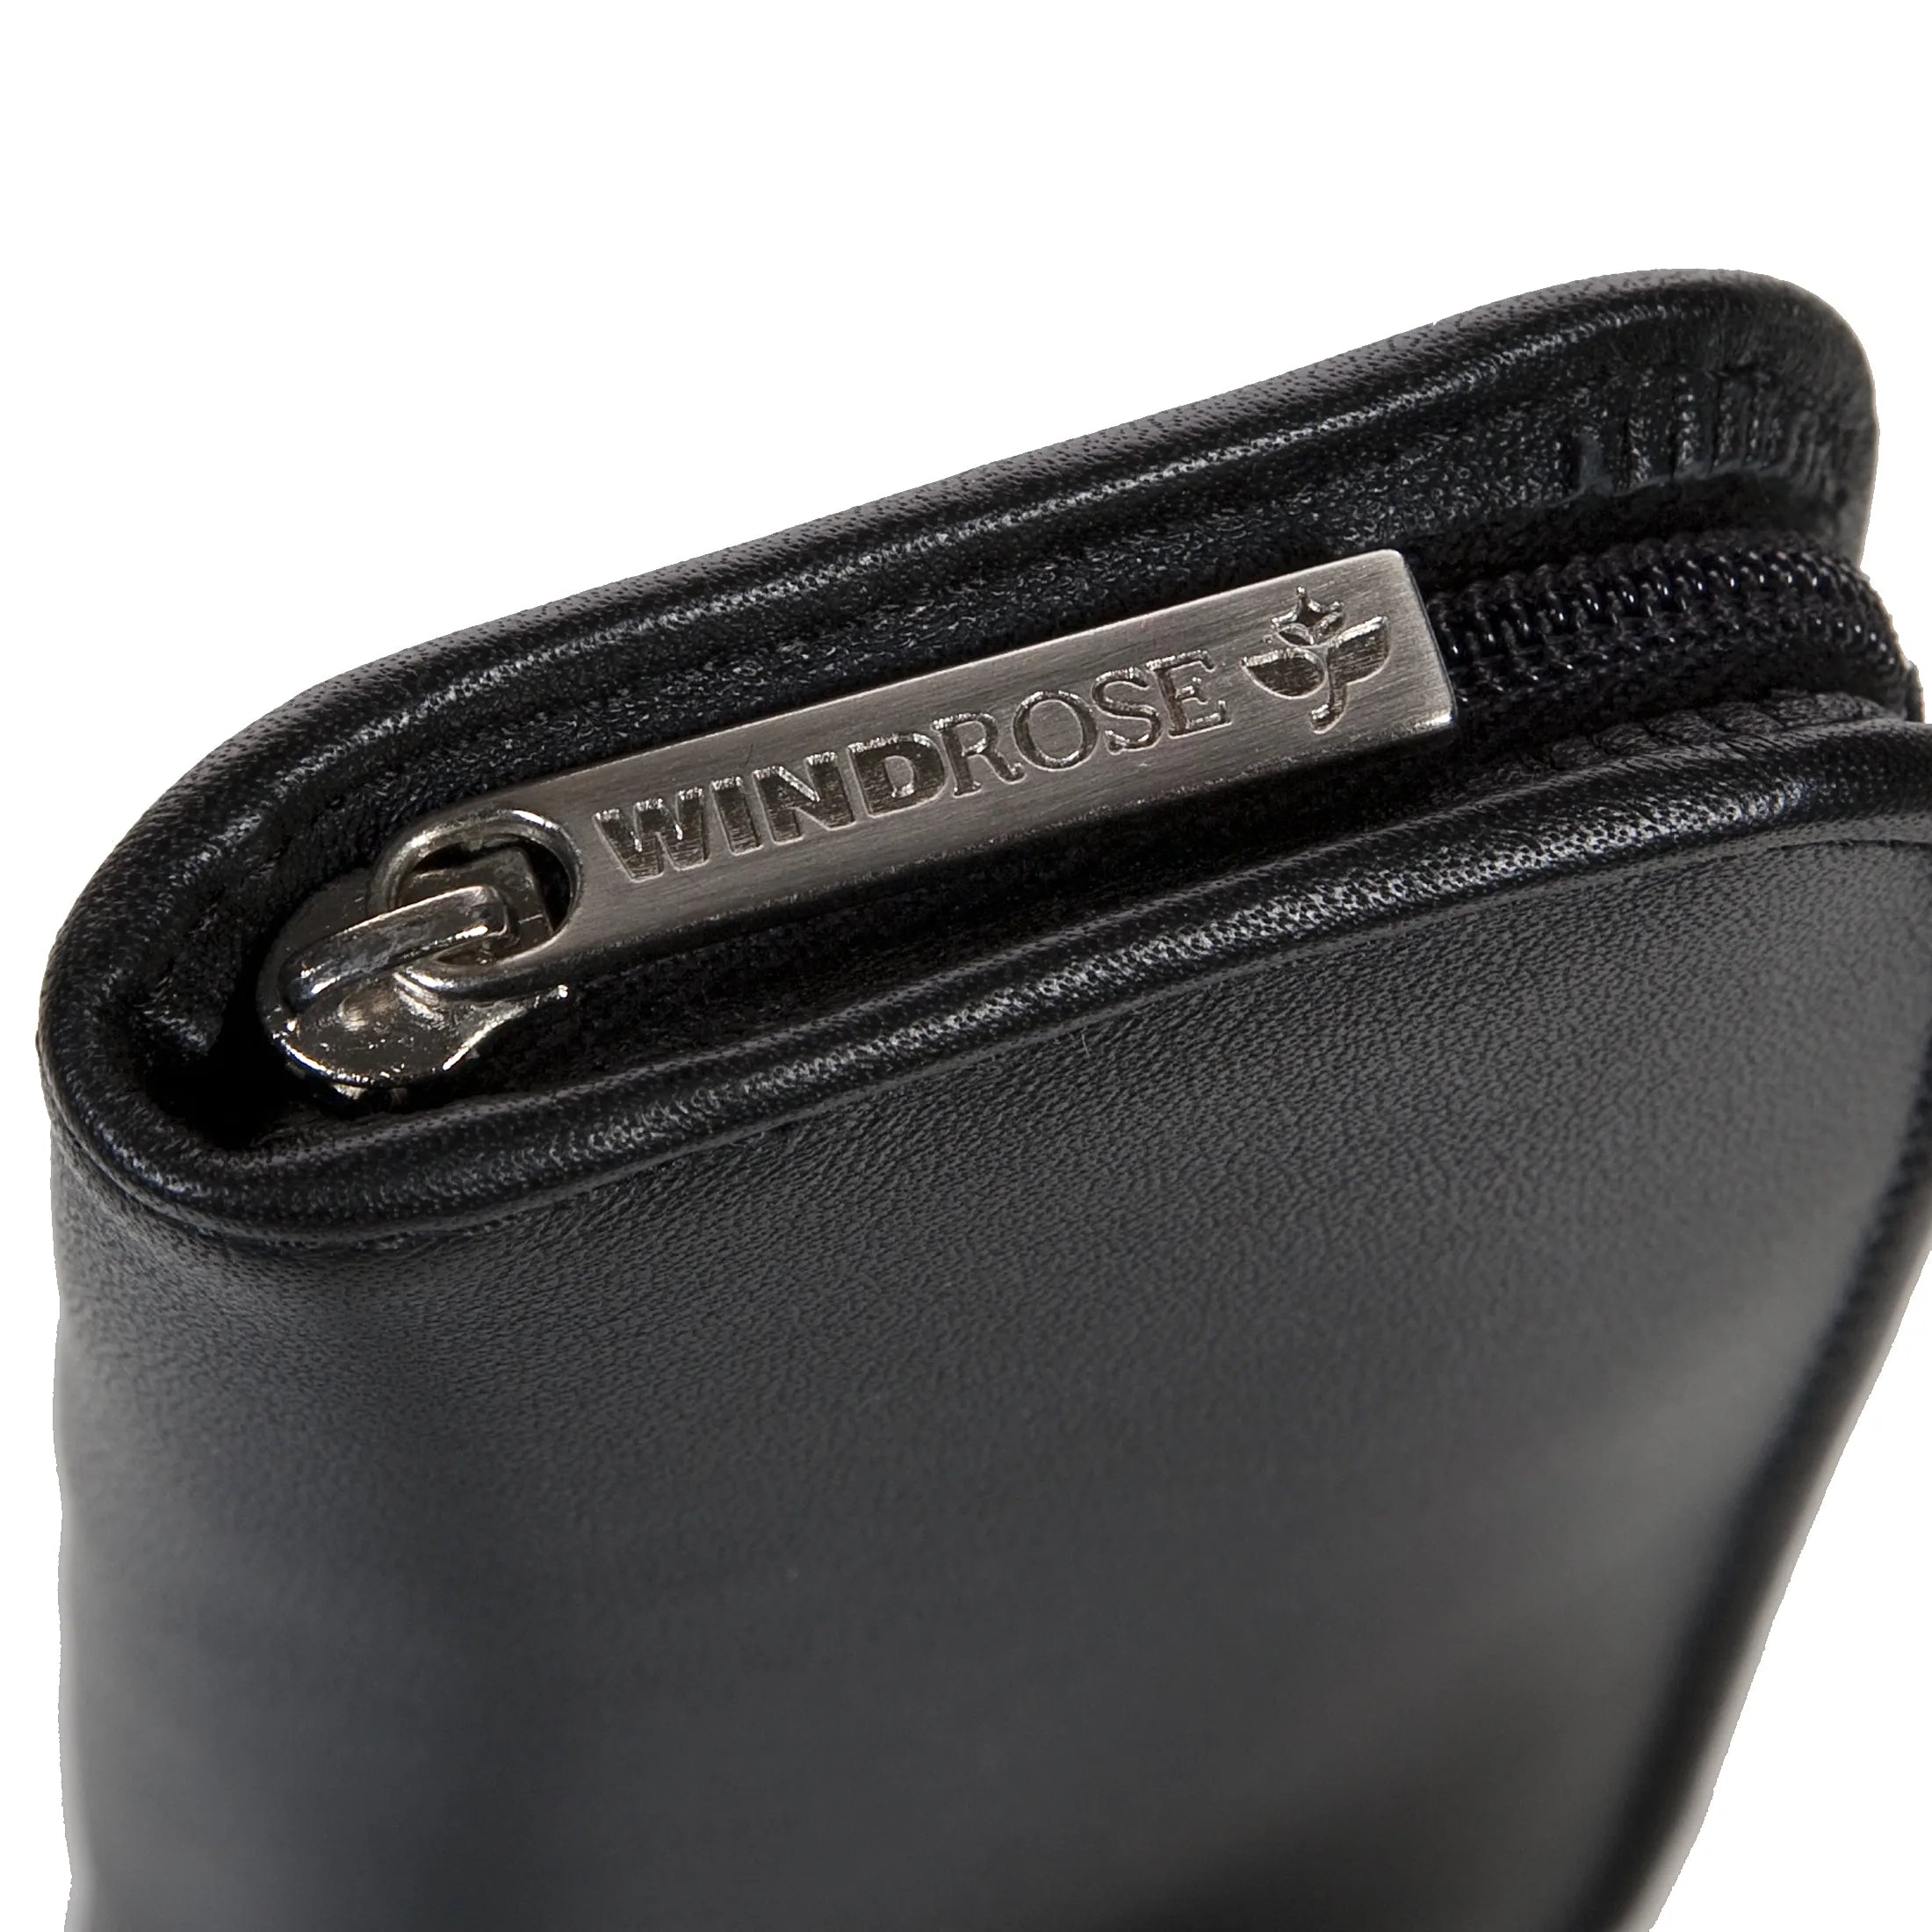 Windrose Nappa Manicure Reißverschluss Etui aus Leder - schwarz